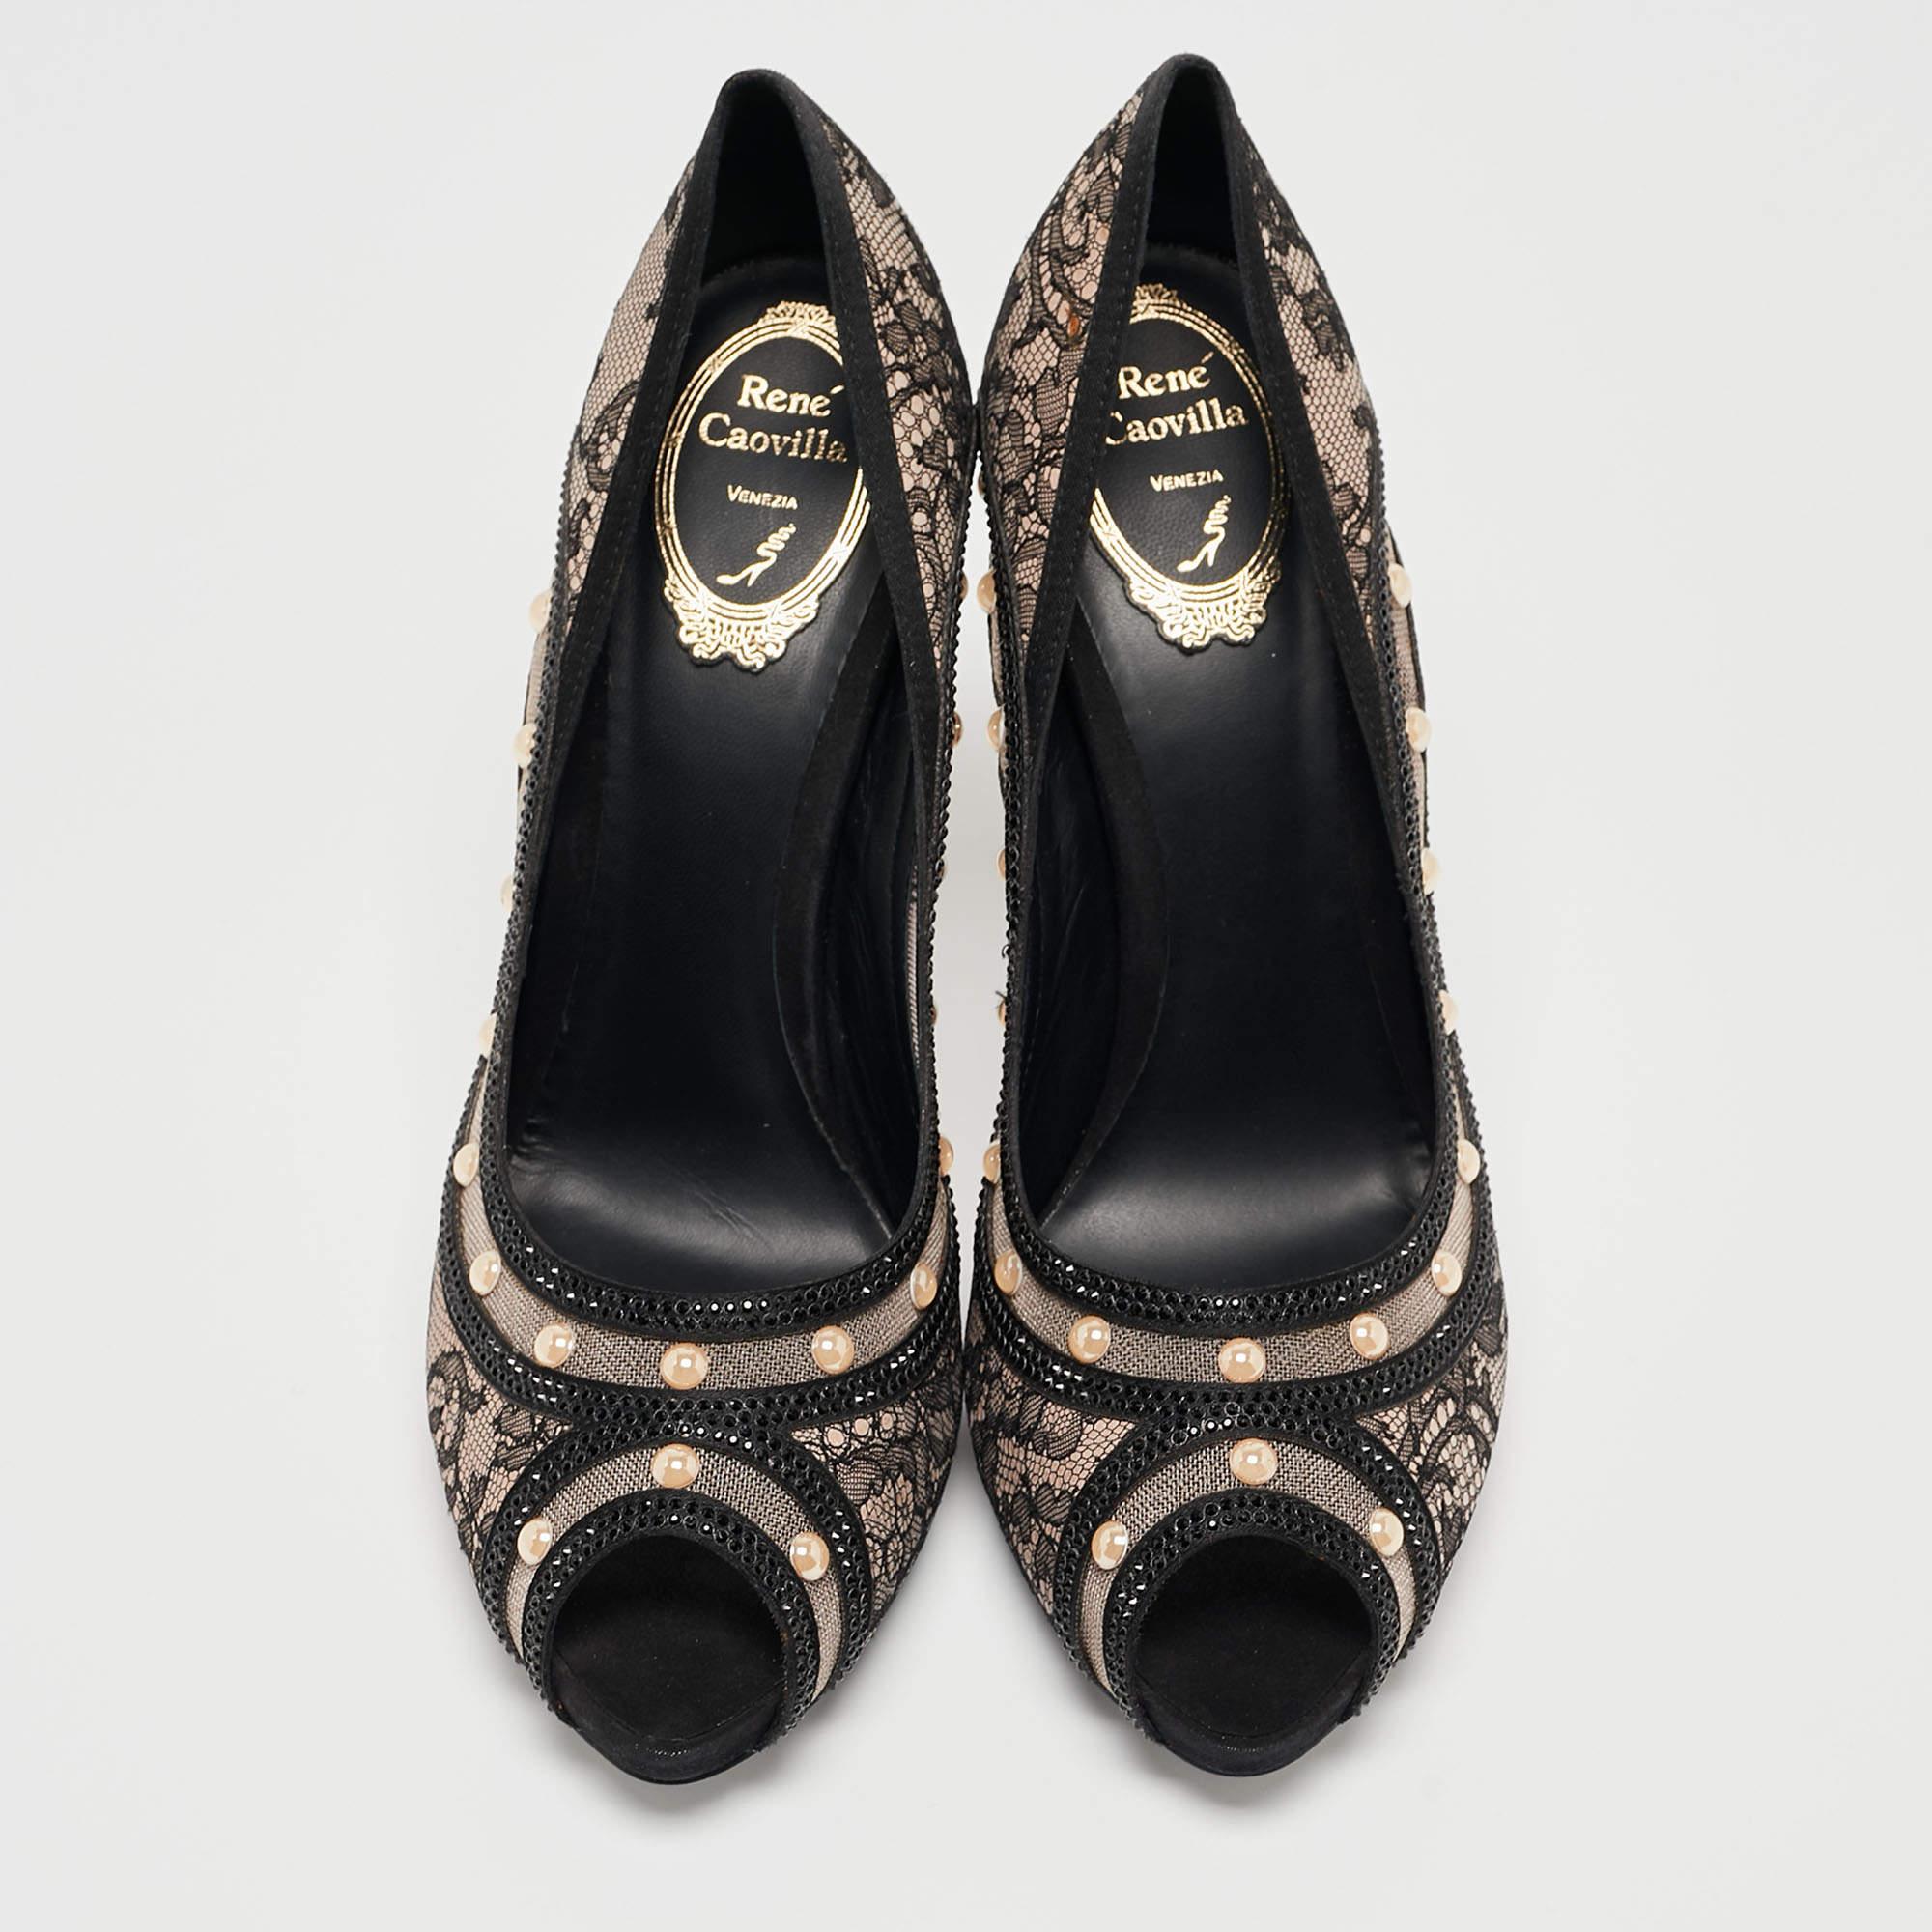 René Caovilla Black Lace Pearls Embellished Platform Peep Toe Pumps Size 41 2